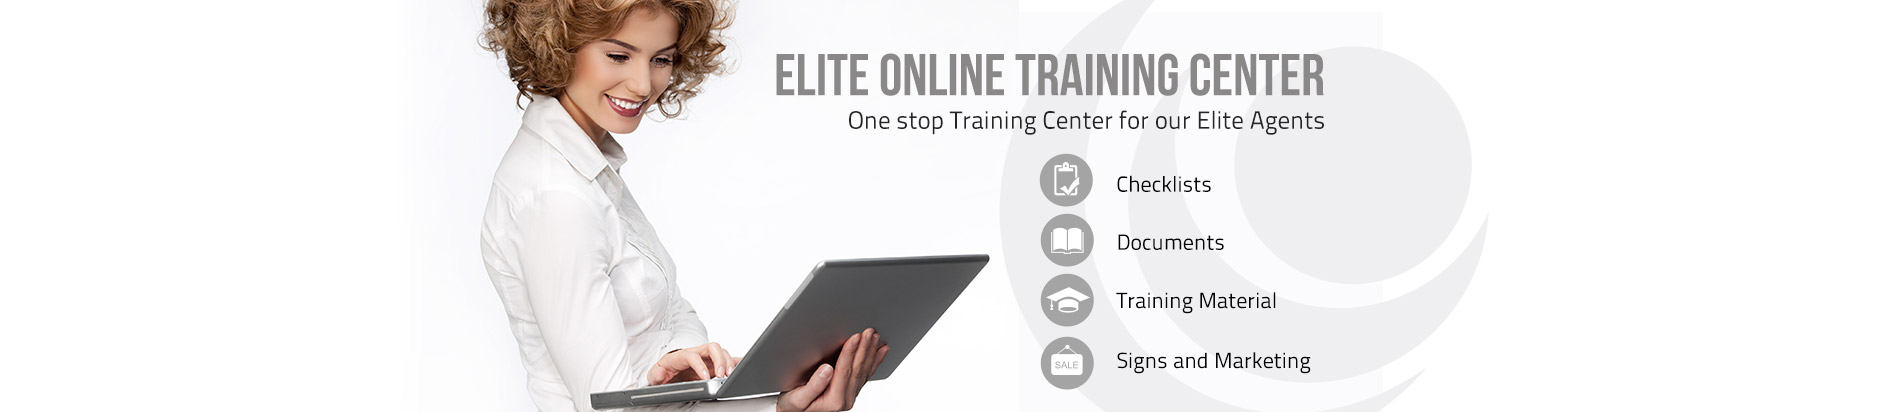 Elite Online Training Center for our Elite Agents